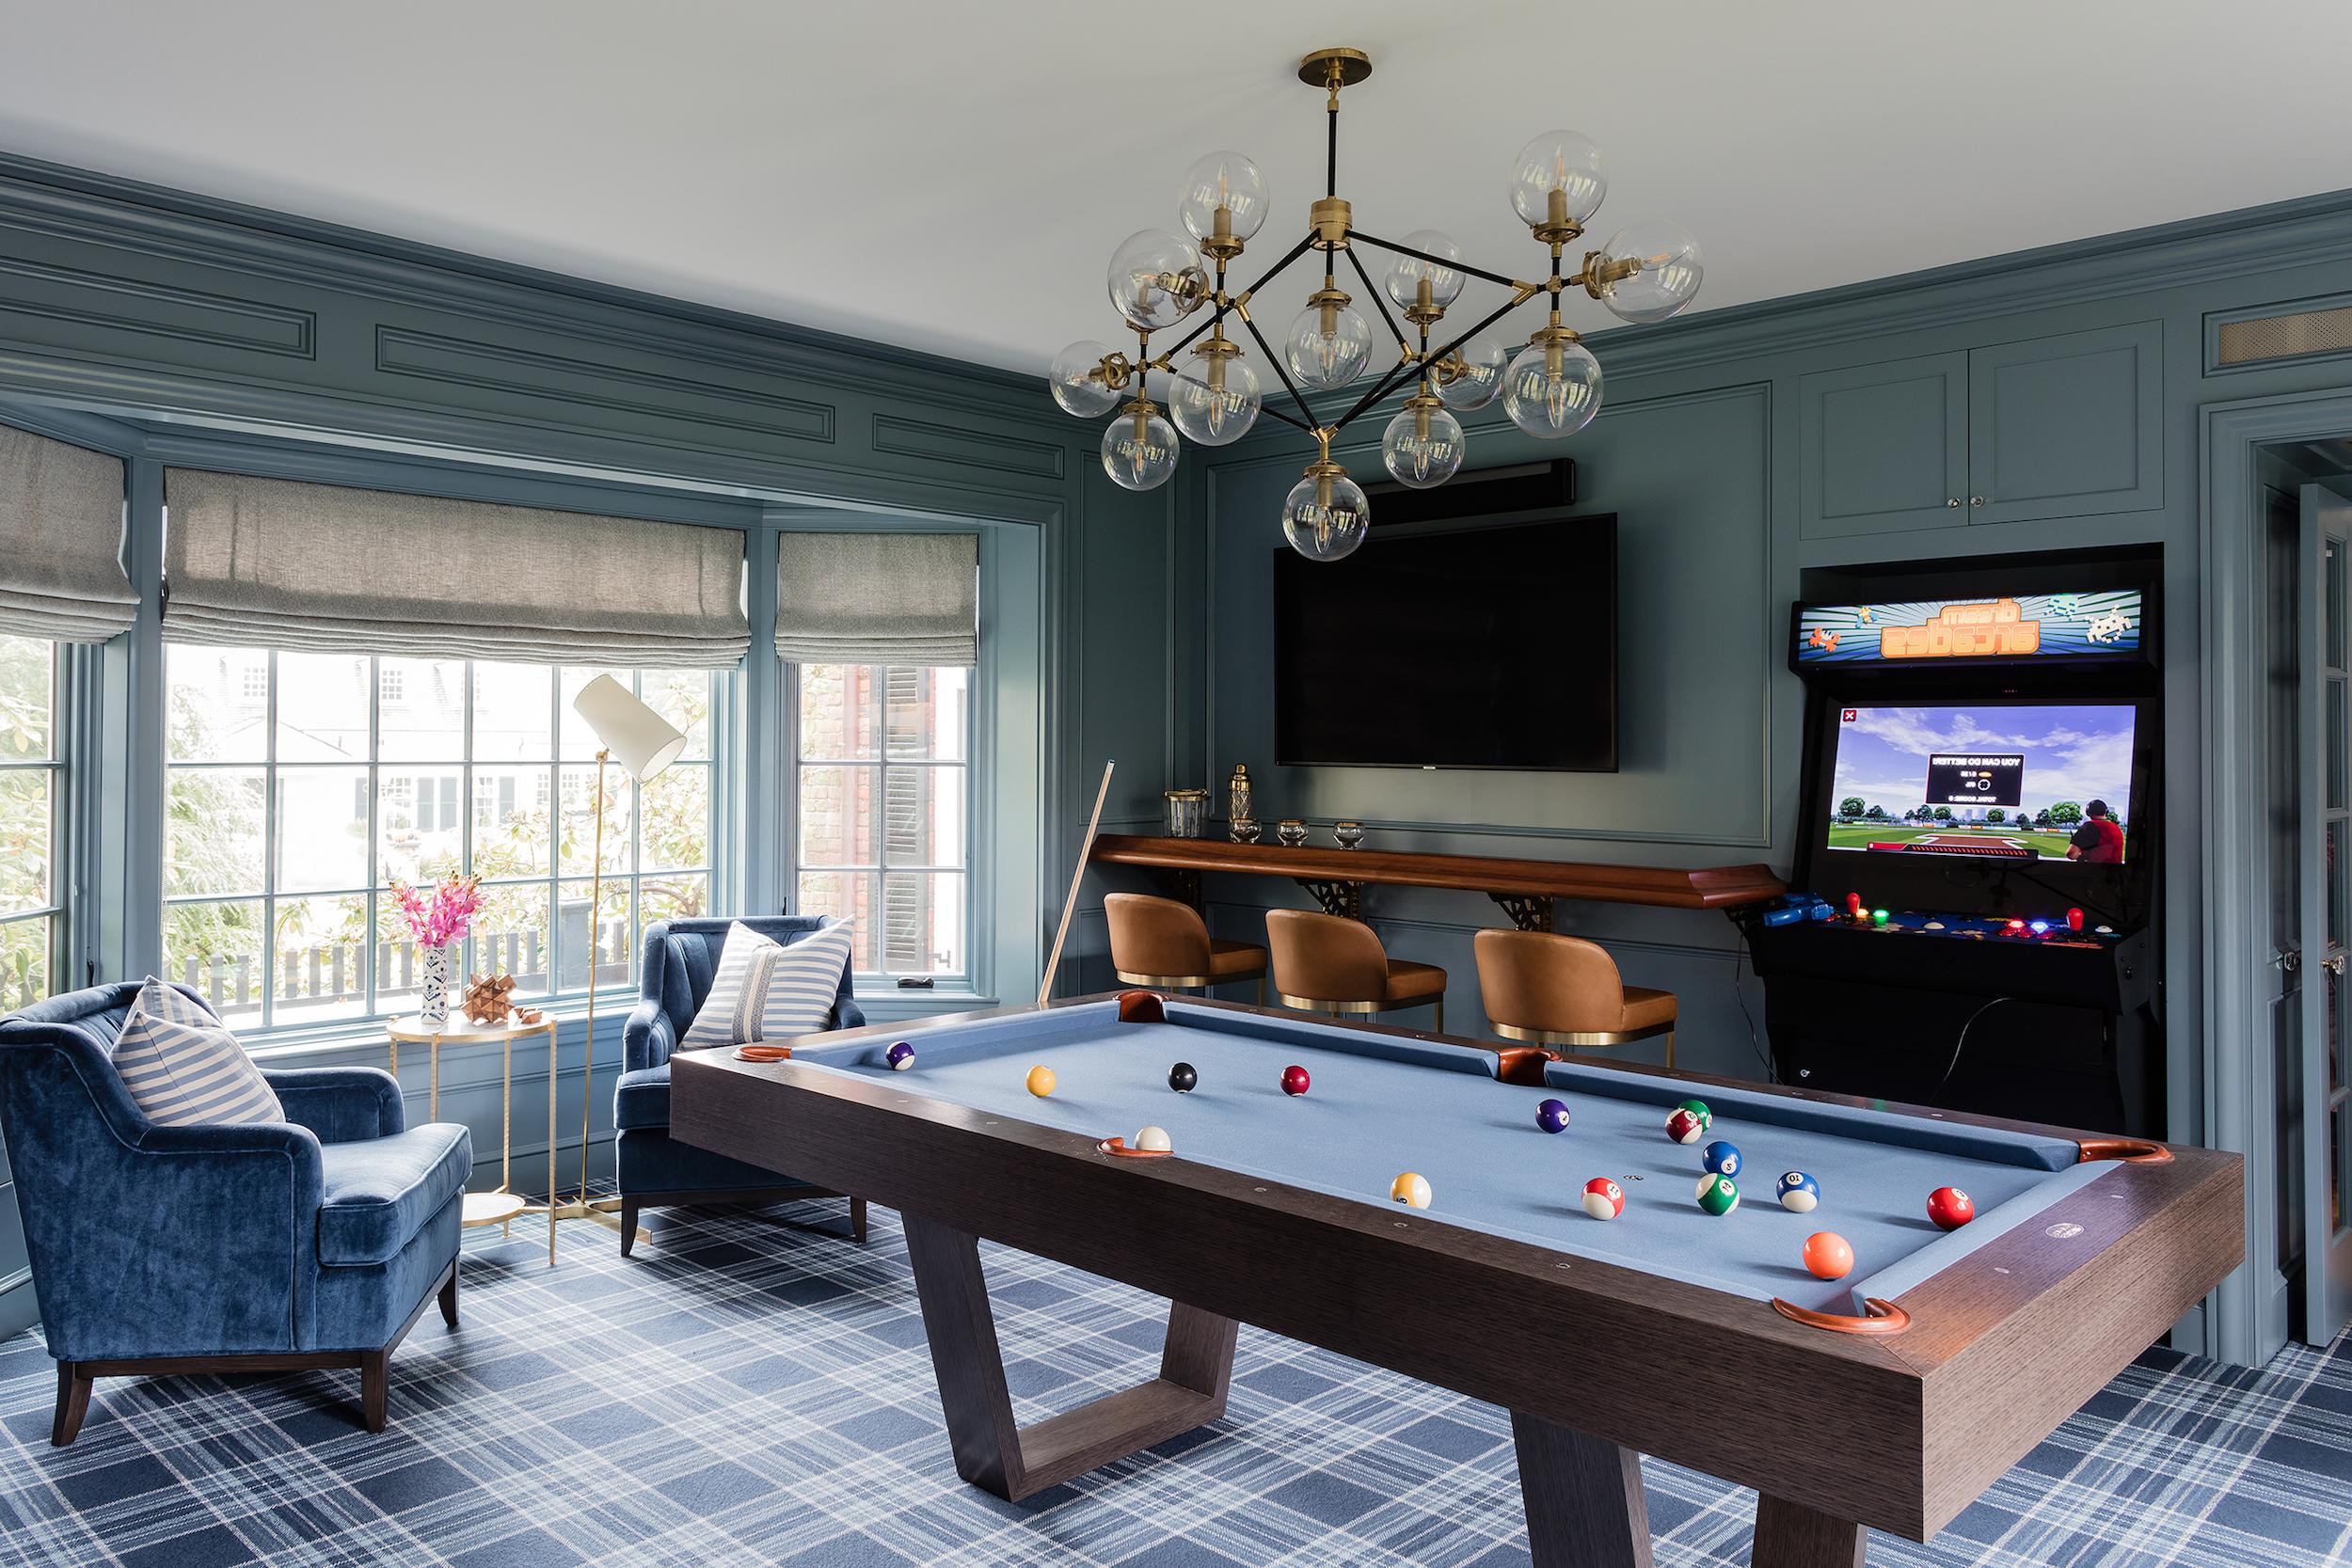 Home Game Room in Blues - Erin Gates Design; Michael J. 李摄影